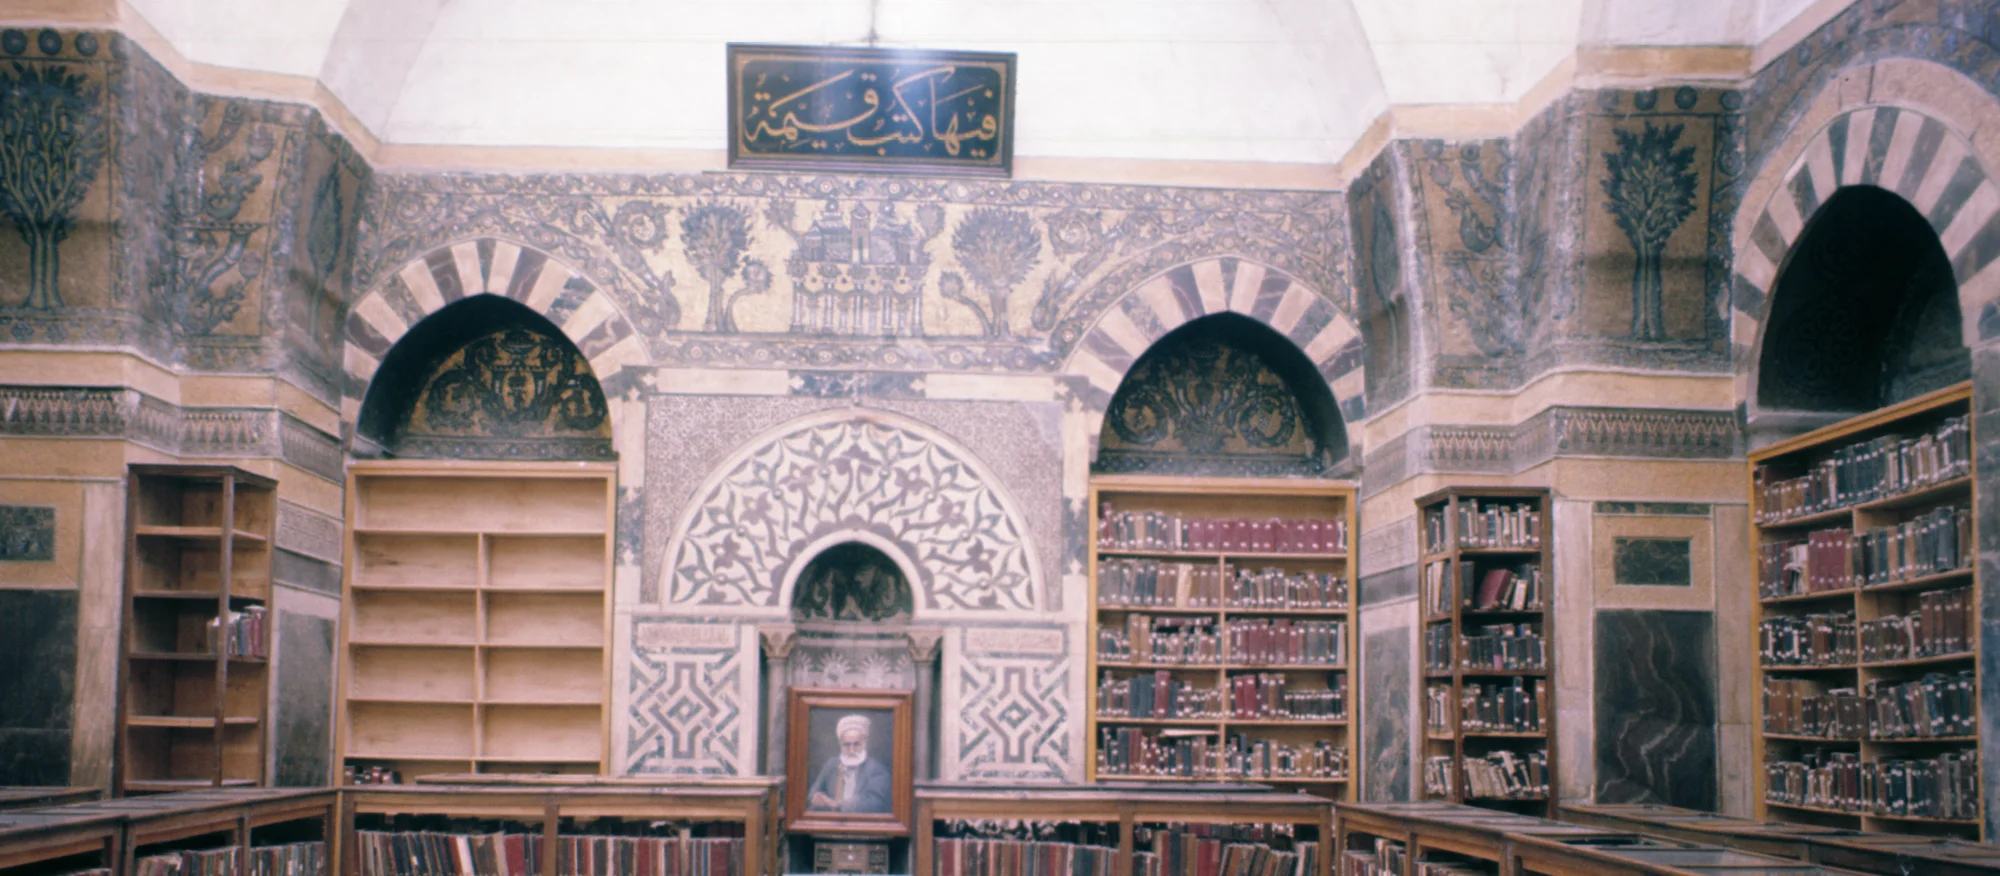 Mausoleum az-Zahir Baybars, Mosaiks südliche Wand